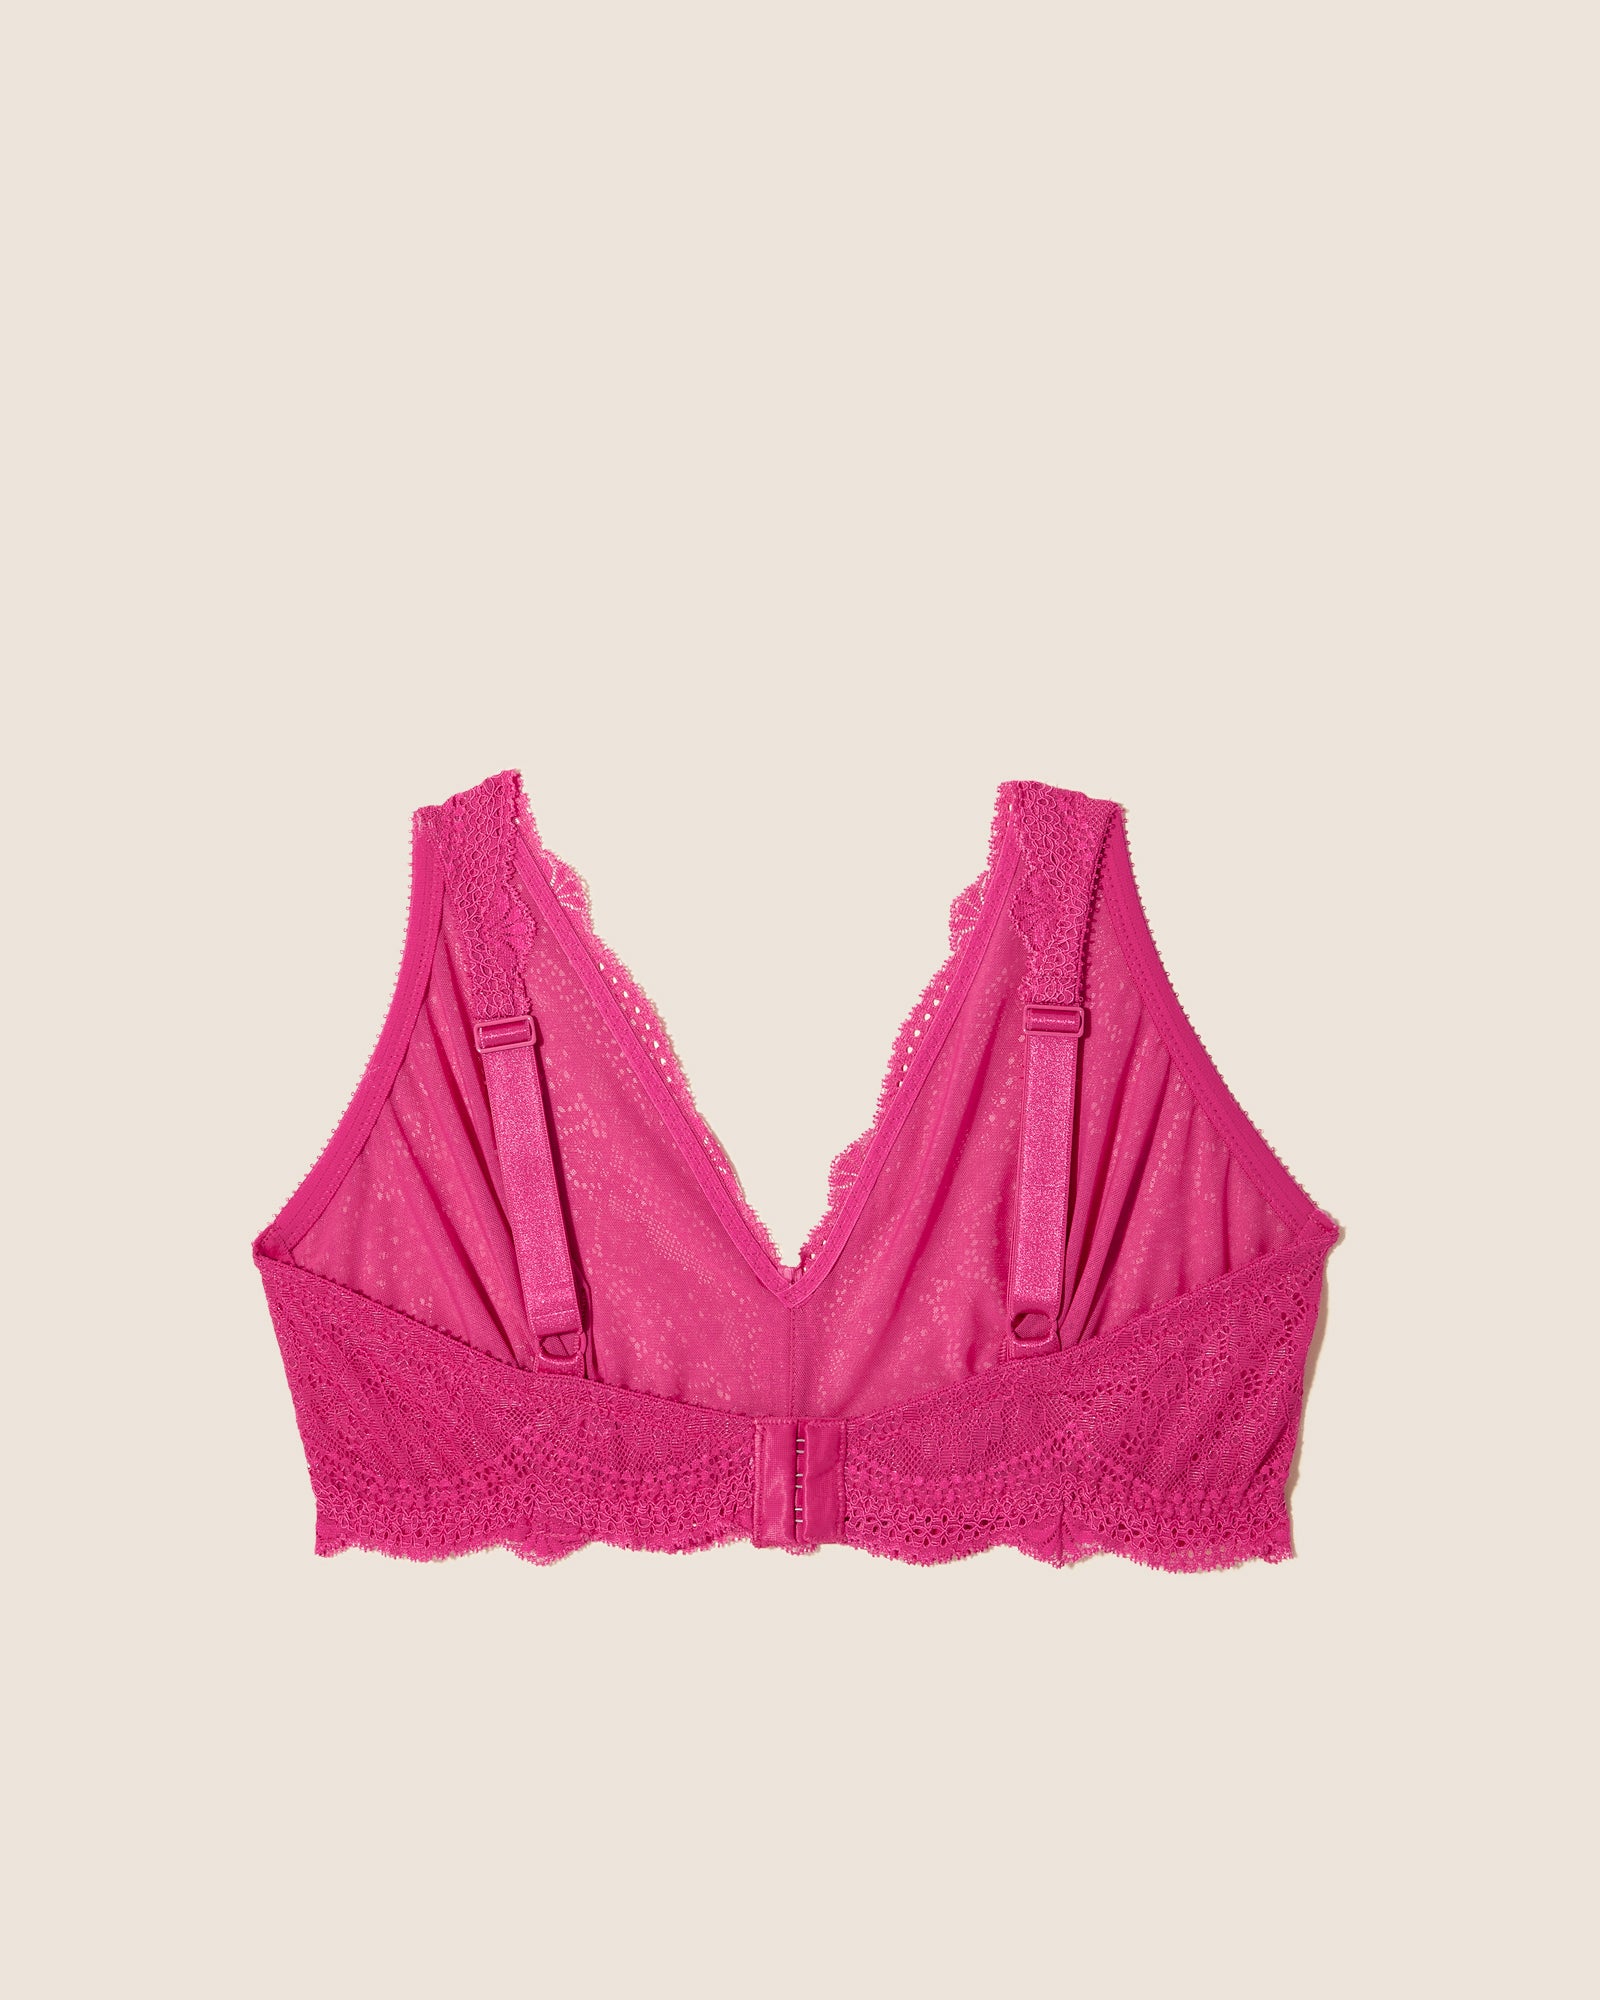 PINK Victoria's Secret, Intimates & Sleepwear, Bundle Lot 2 Bras 32a Cup  Pink Victorias Secret